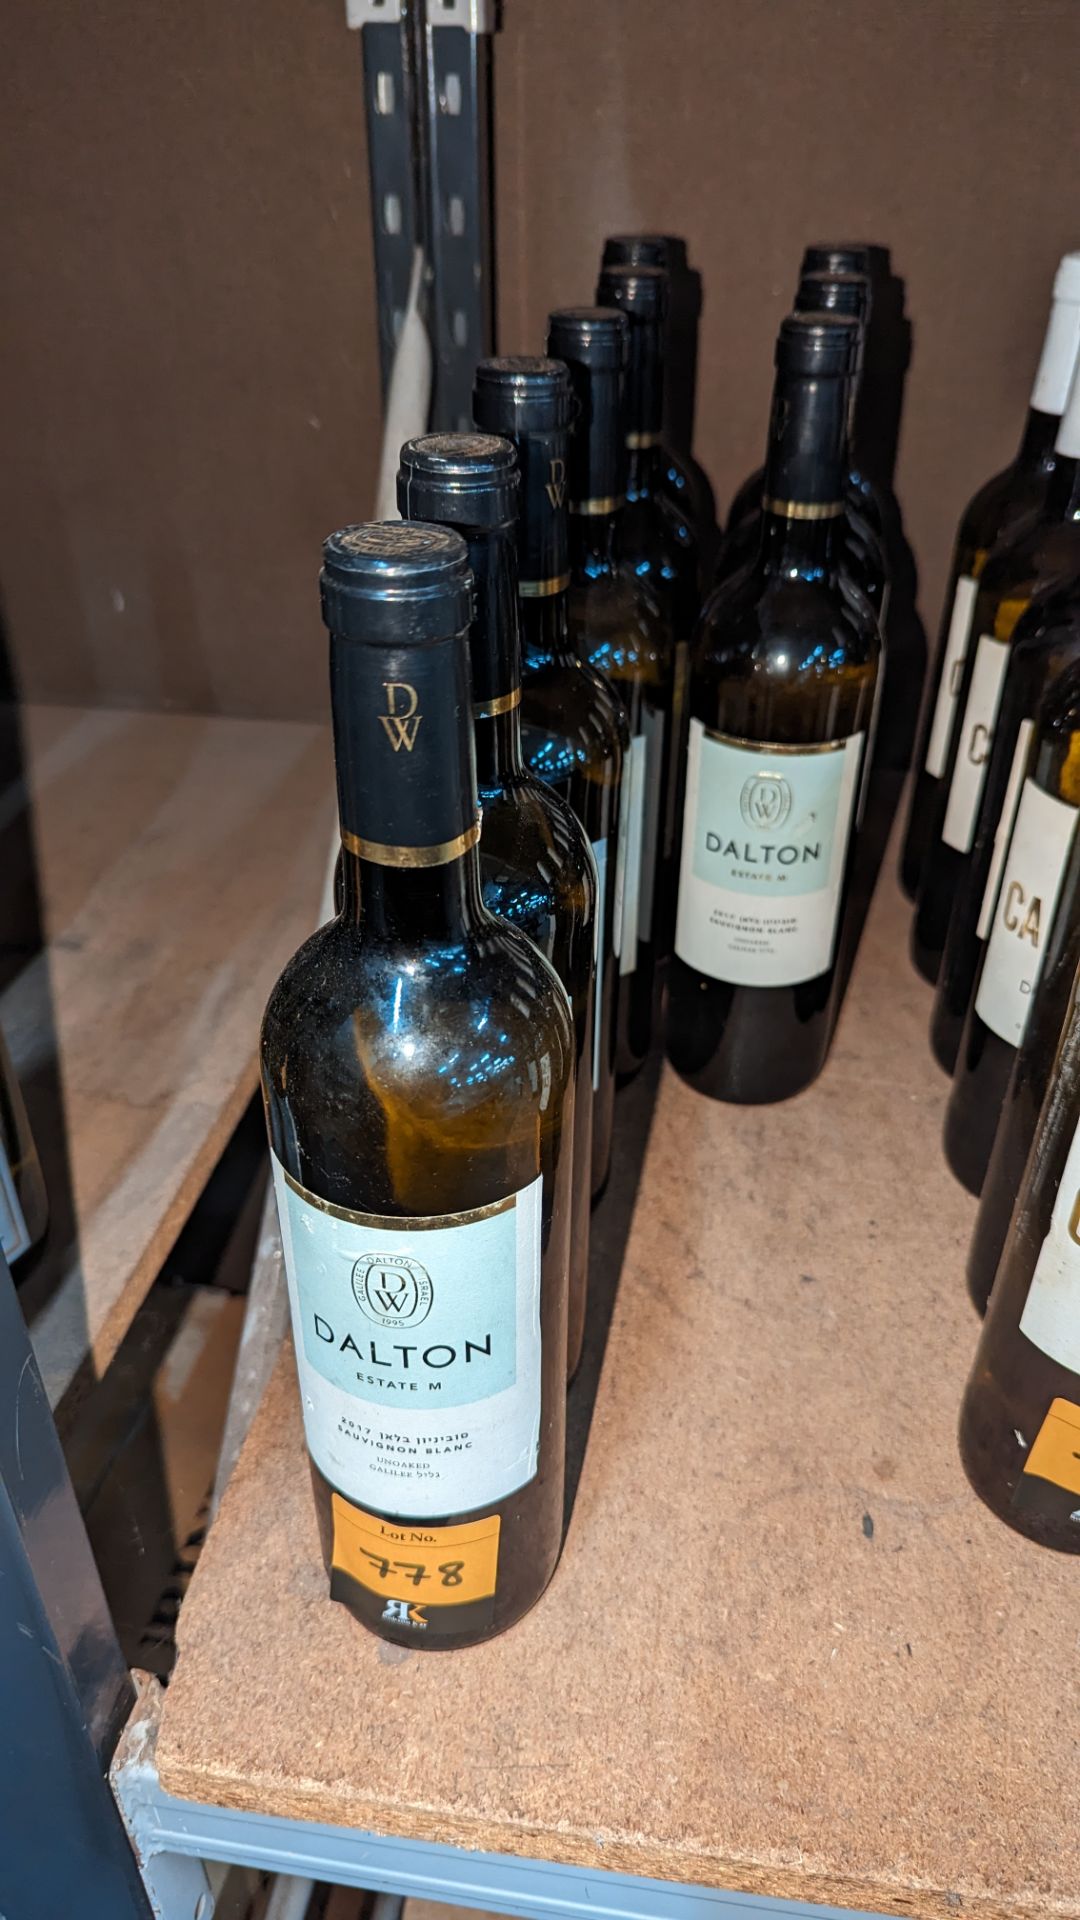 9 bottles of Dalton Estate 2017 Sauvignon Blanc Israeli white wine sold under AWRS number XQAW000001